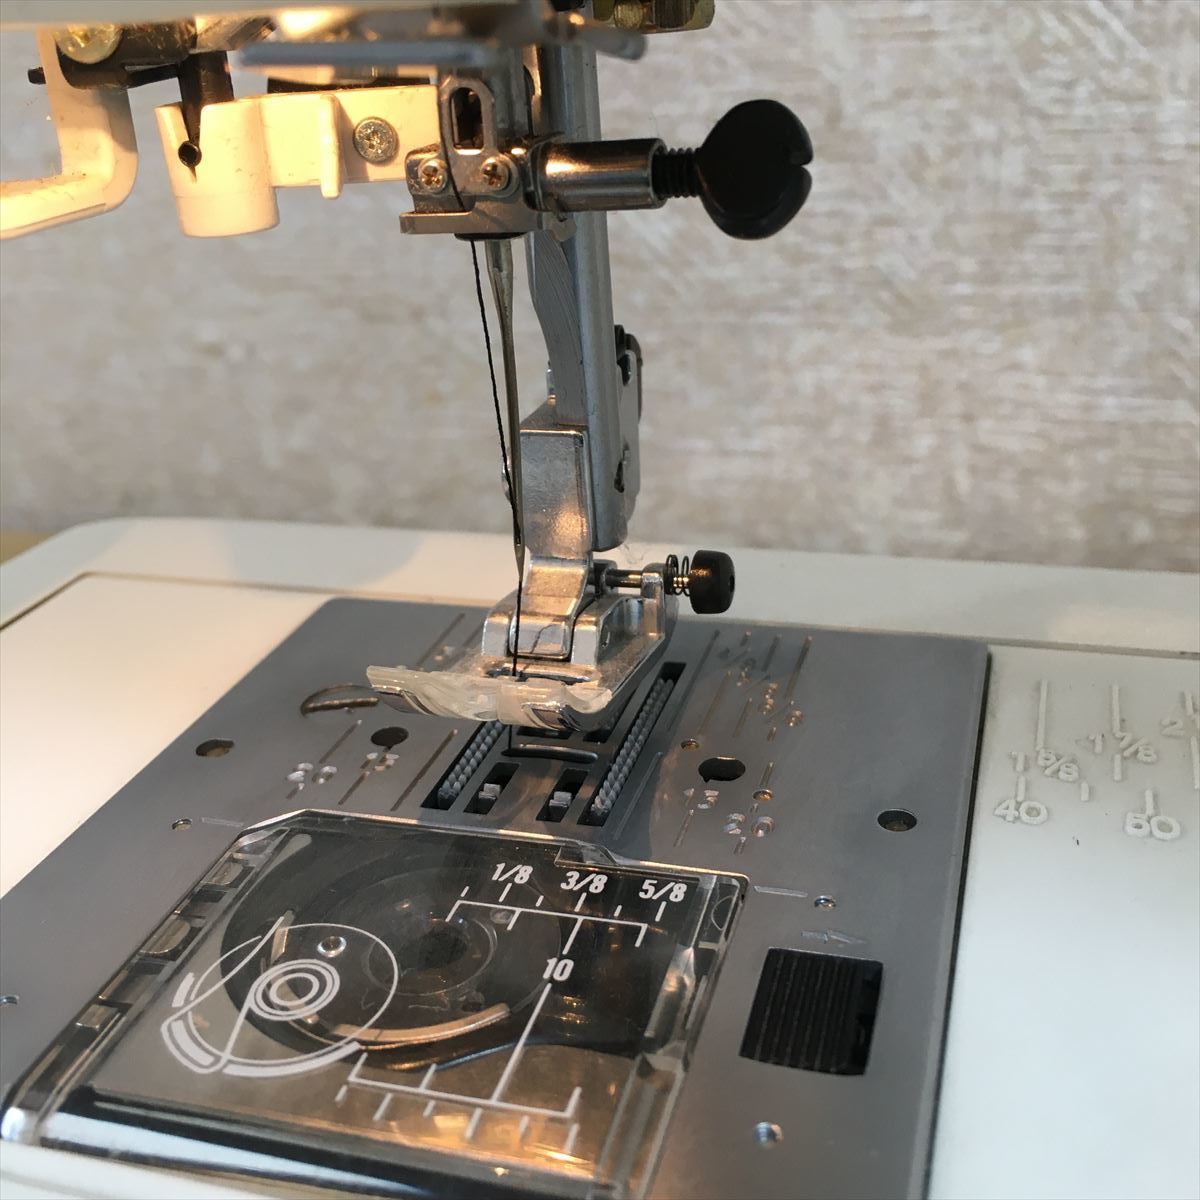 JANOME ジャノメ Memory Craft 5150 MODEL 840 ミシン コンピューターミシン ハンドクラフト 手芸 手工芸 裁縫 裁縫道具 2 カ 4992_画像3